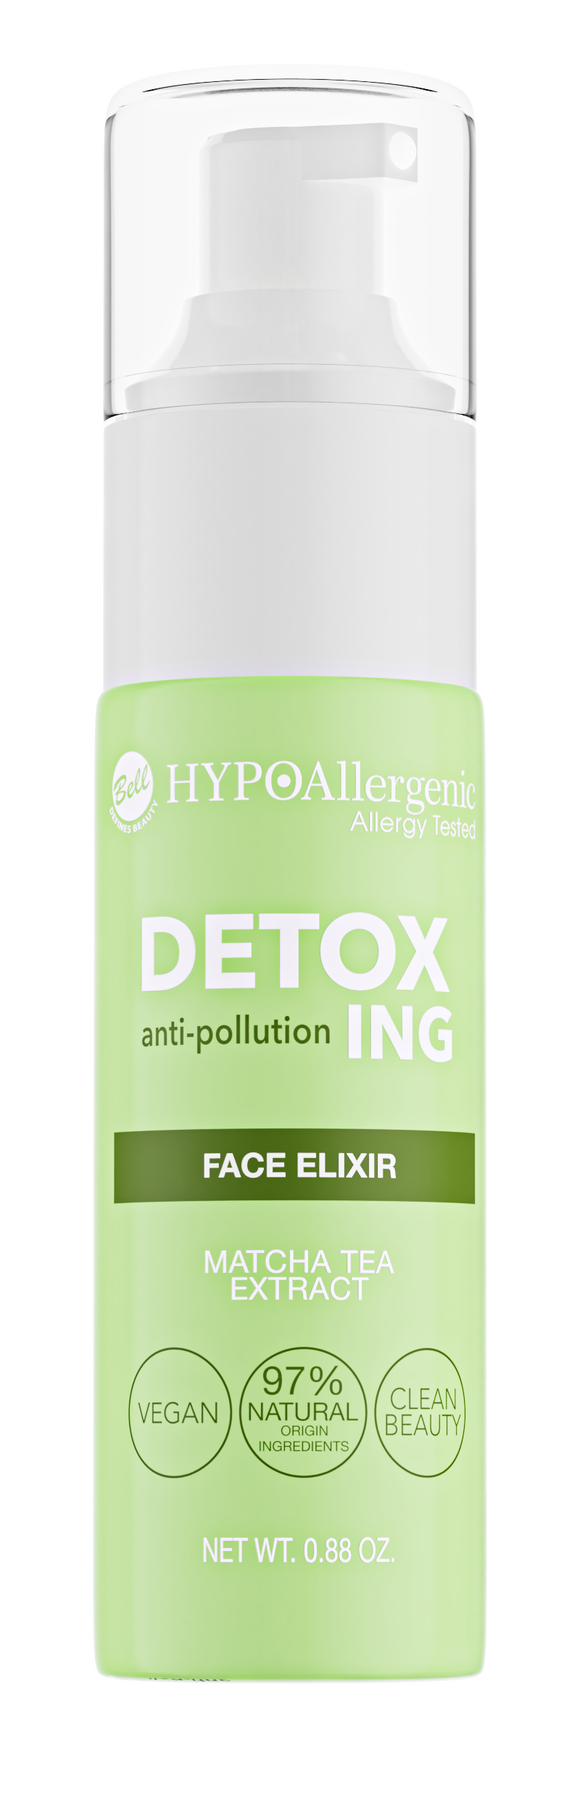 Bell Hypoallergenic Detoxing Face Elixir Antioxidant Under Makeup Serum with  with Matcha Tea Extract Anti - Pollution & Vegan 25g